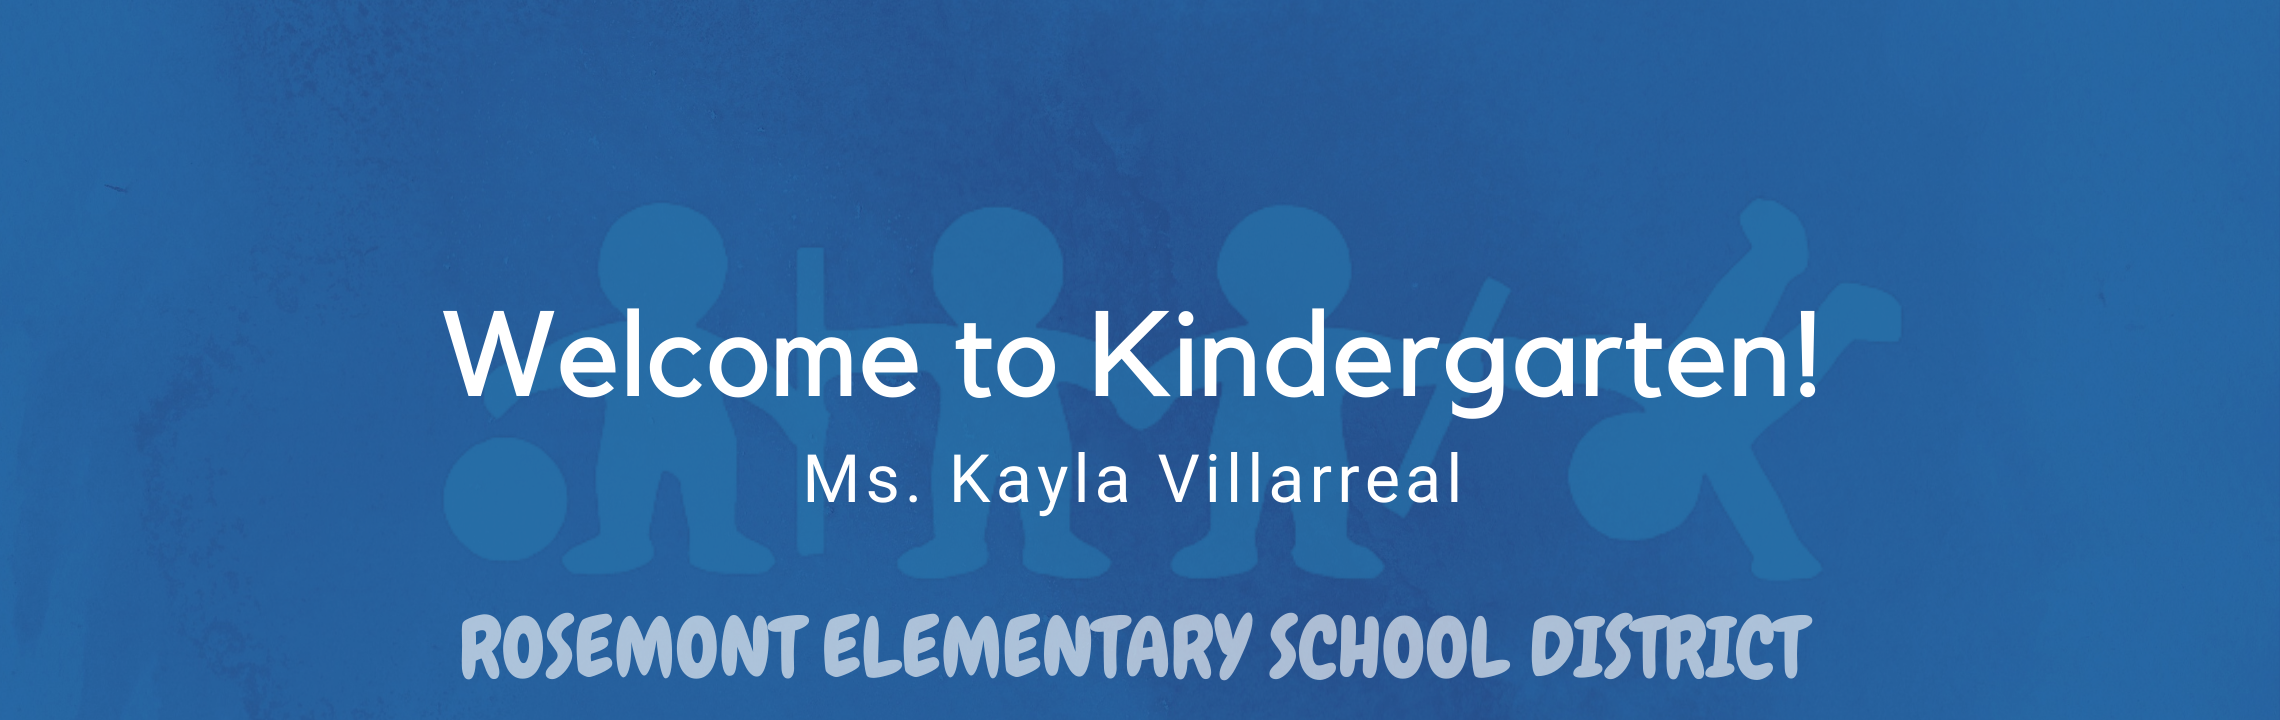 Welcome to Kindergraten! Ms. Kayla Villarreal 